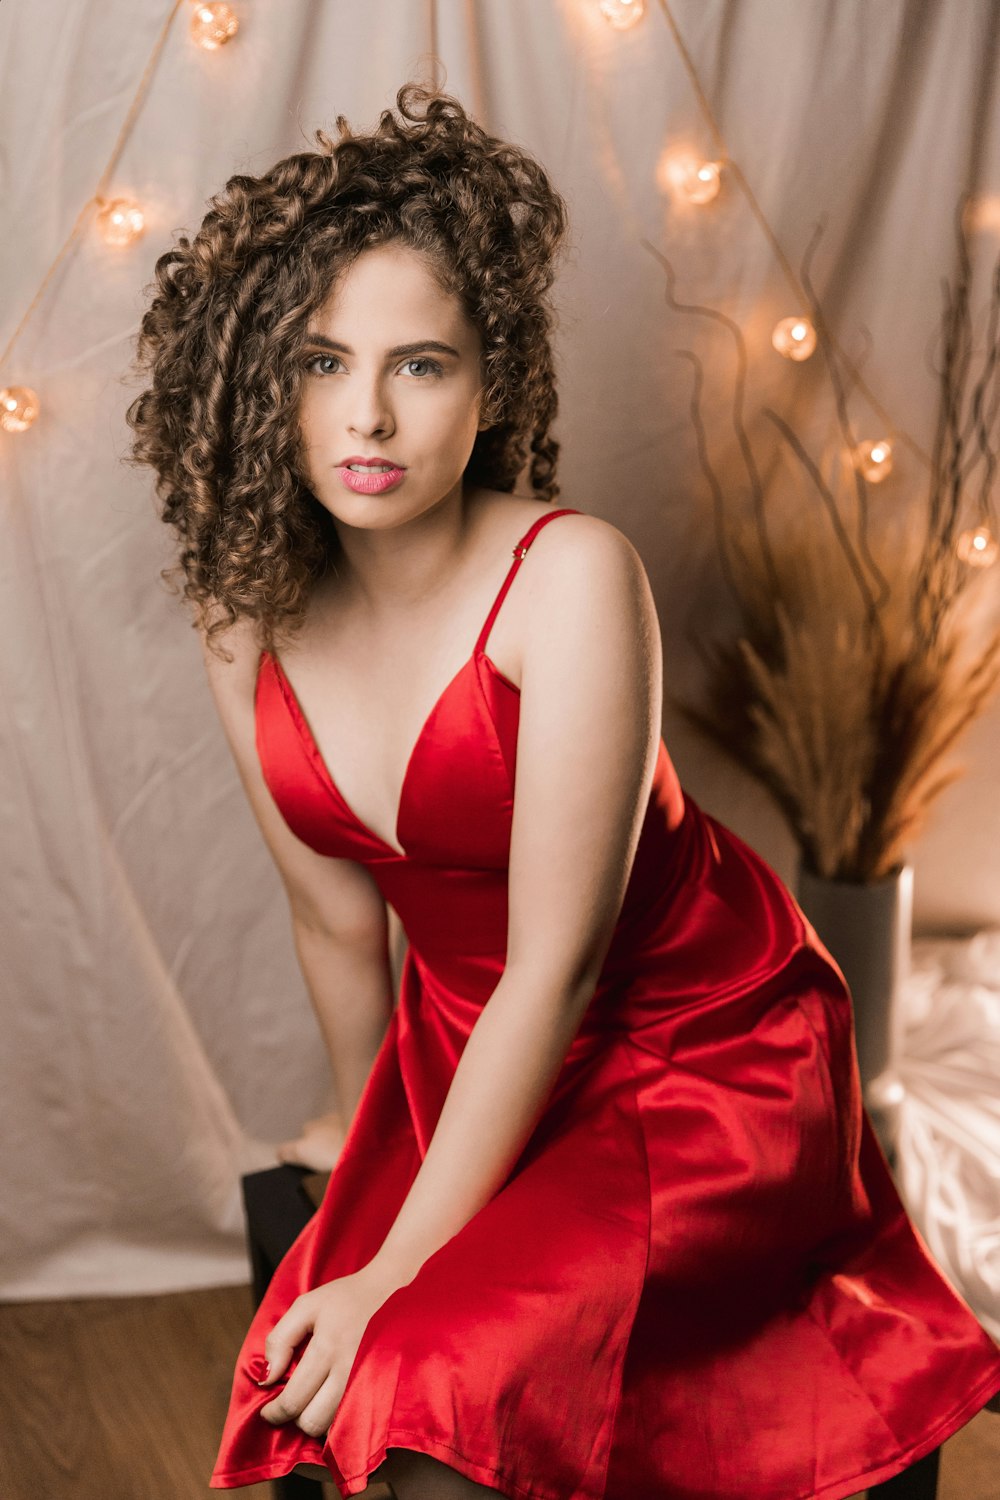 Foto mujer con vestido rojo de tirantes finos – Imagen Femenino gratis en  Unsplash